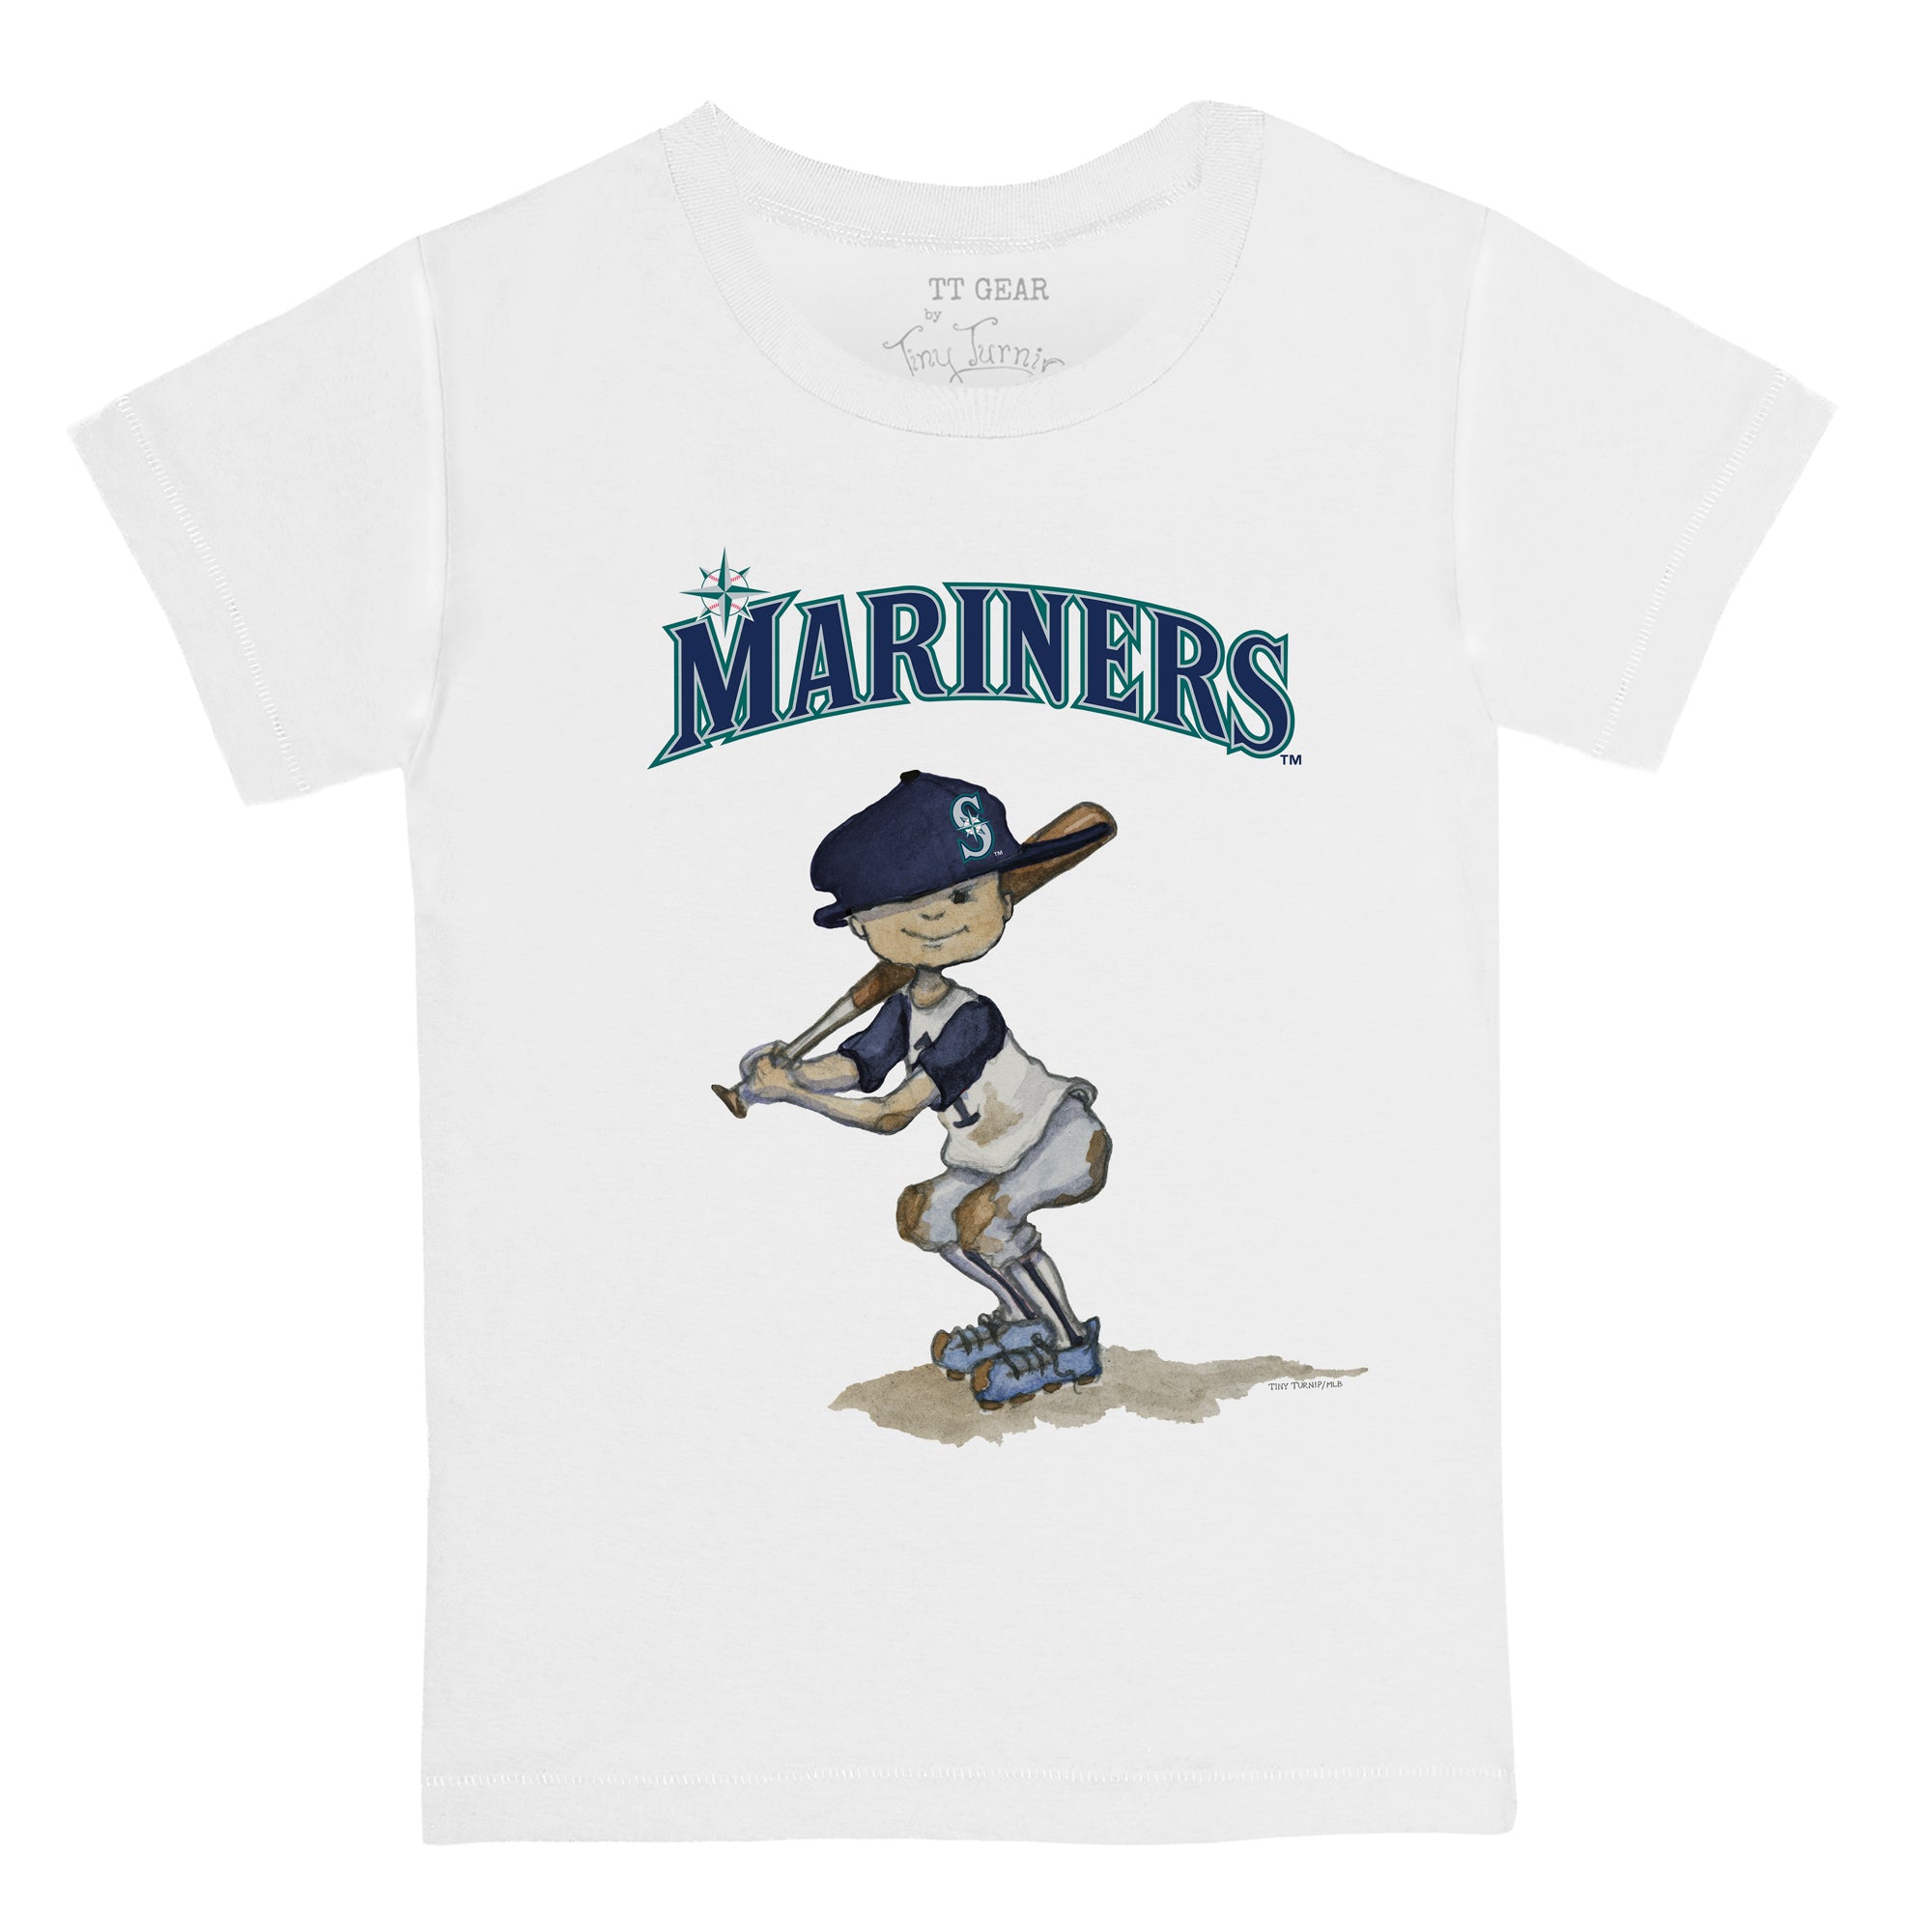 Shirt Seattle Mariners Medium Sea Us Rise